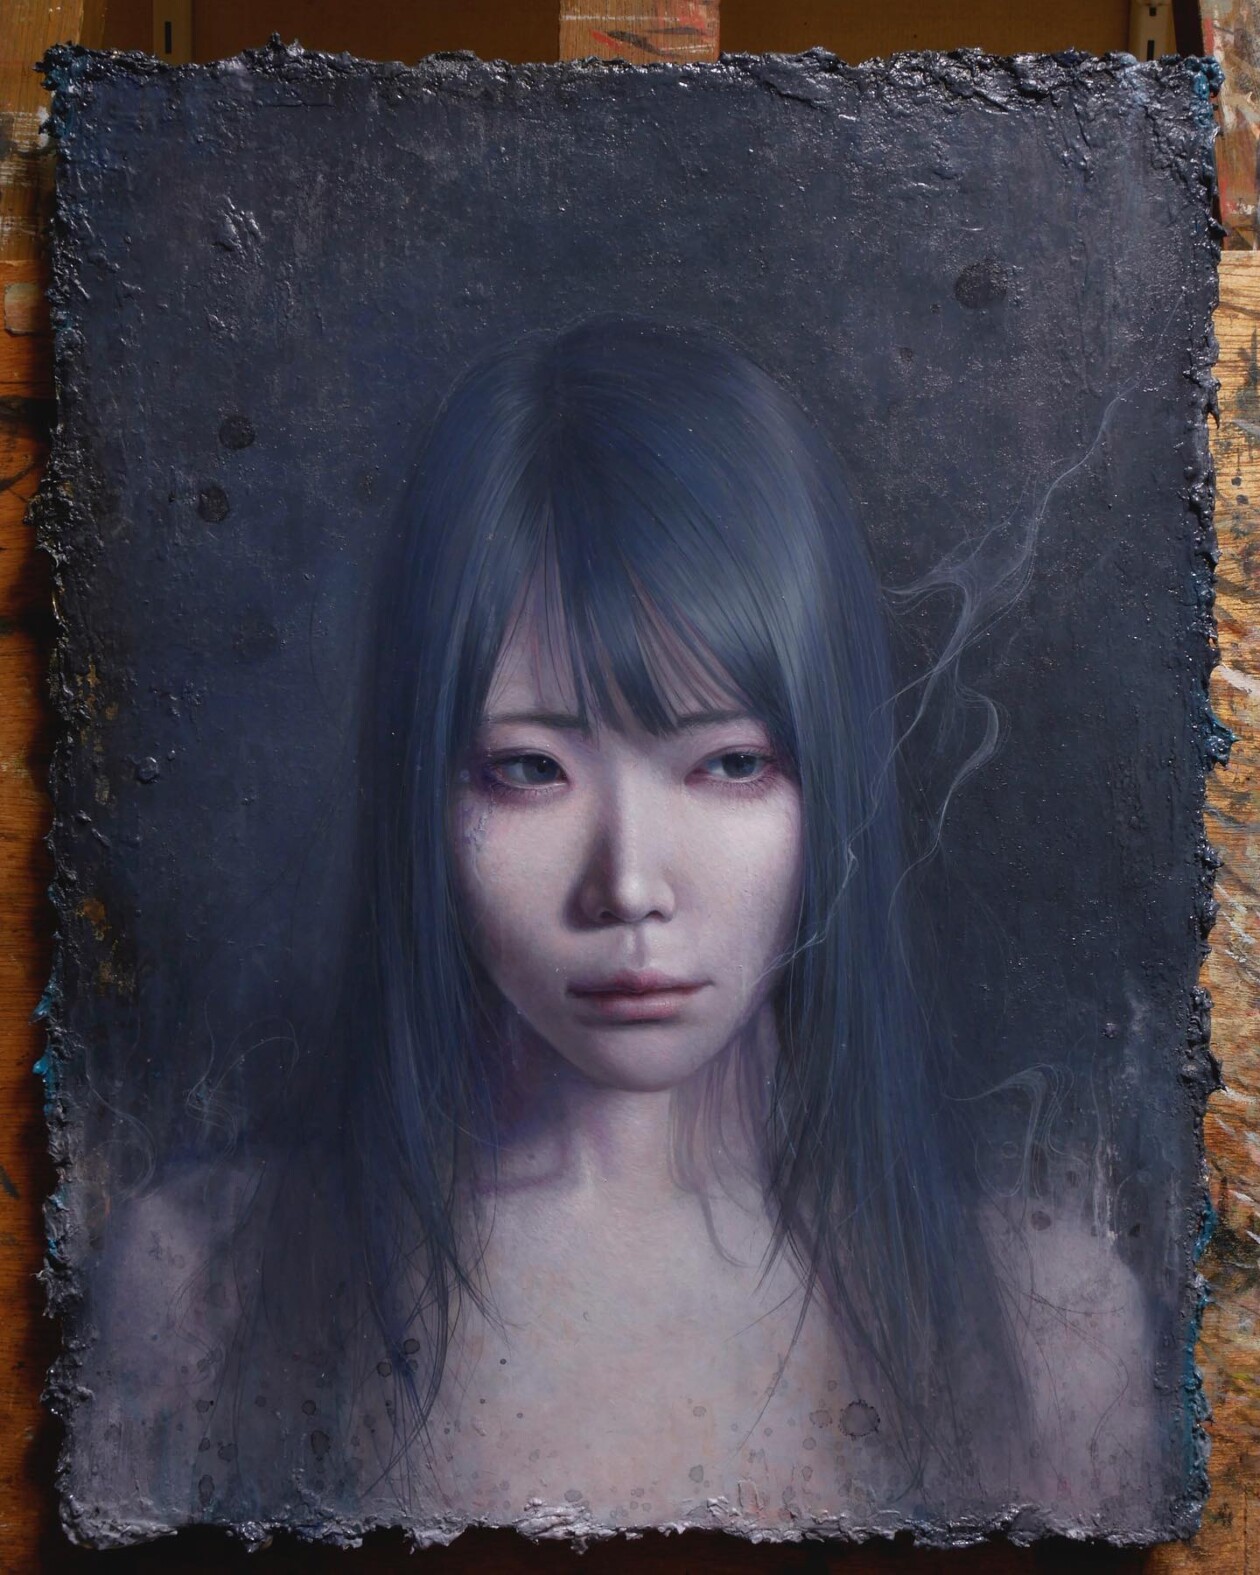 Capturing The Unseen, The Sublime Artistry Of Yosuke Kawashima (9)